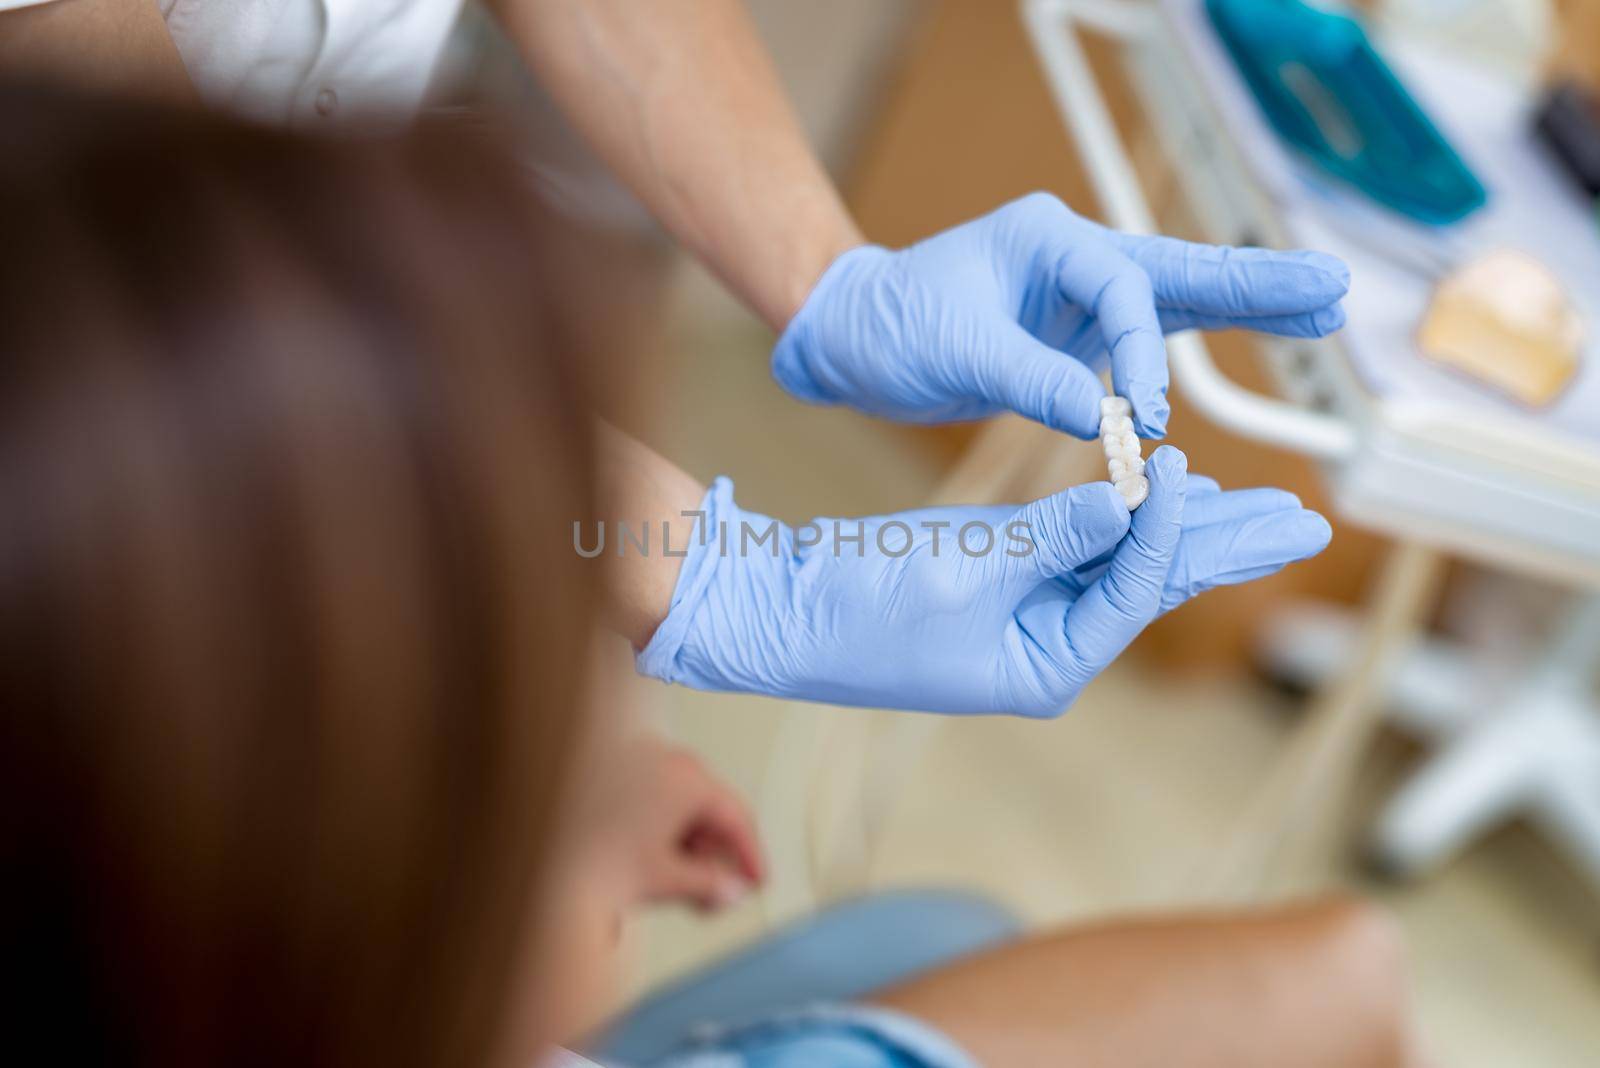 Dentist showing porcelain crowns to the patient. Close-up. Unrecognizable people.